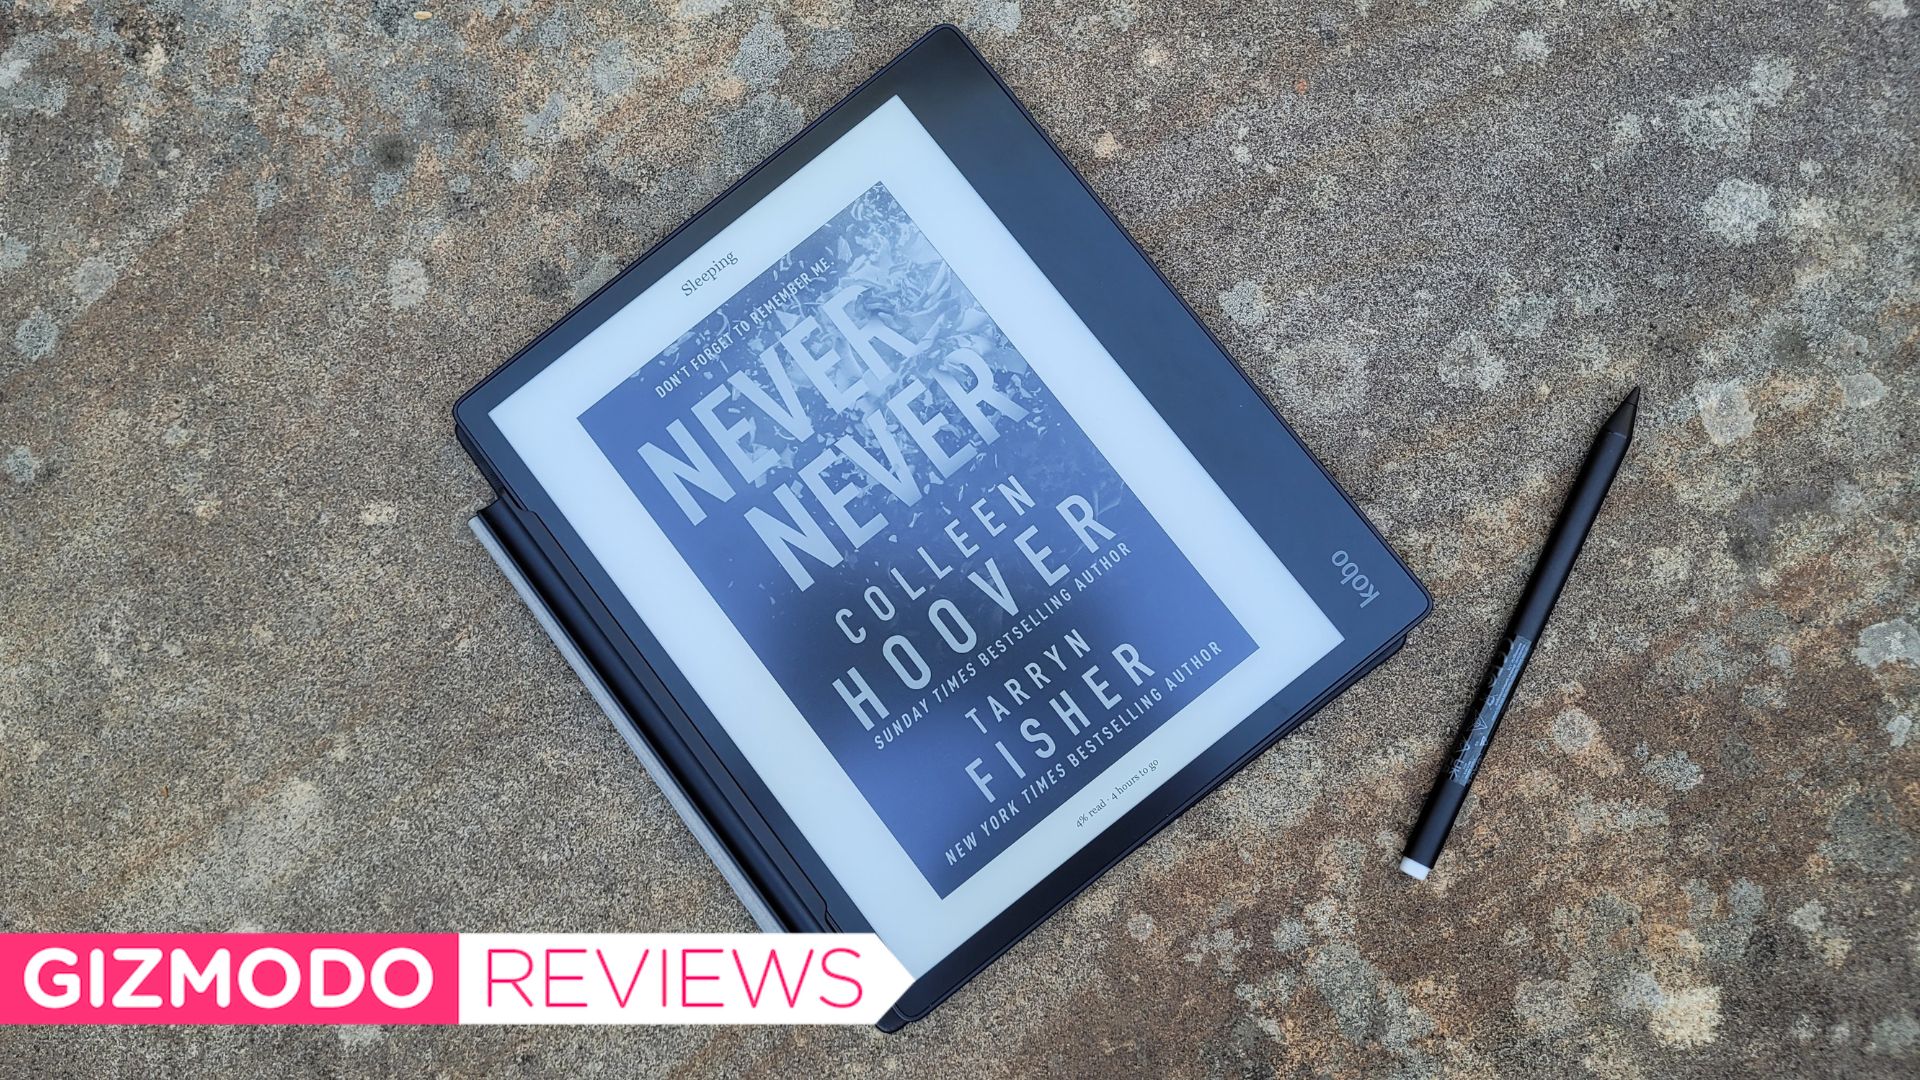 Kobo Elipsa review: A versatile E-Ink ebook reader and notetaker